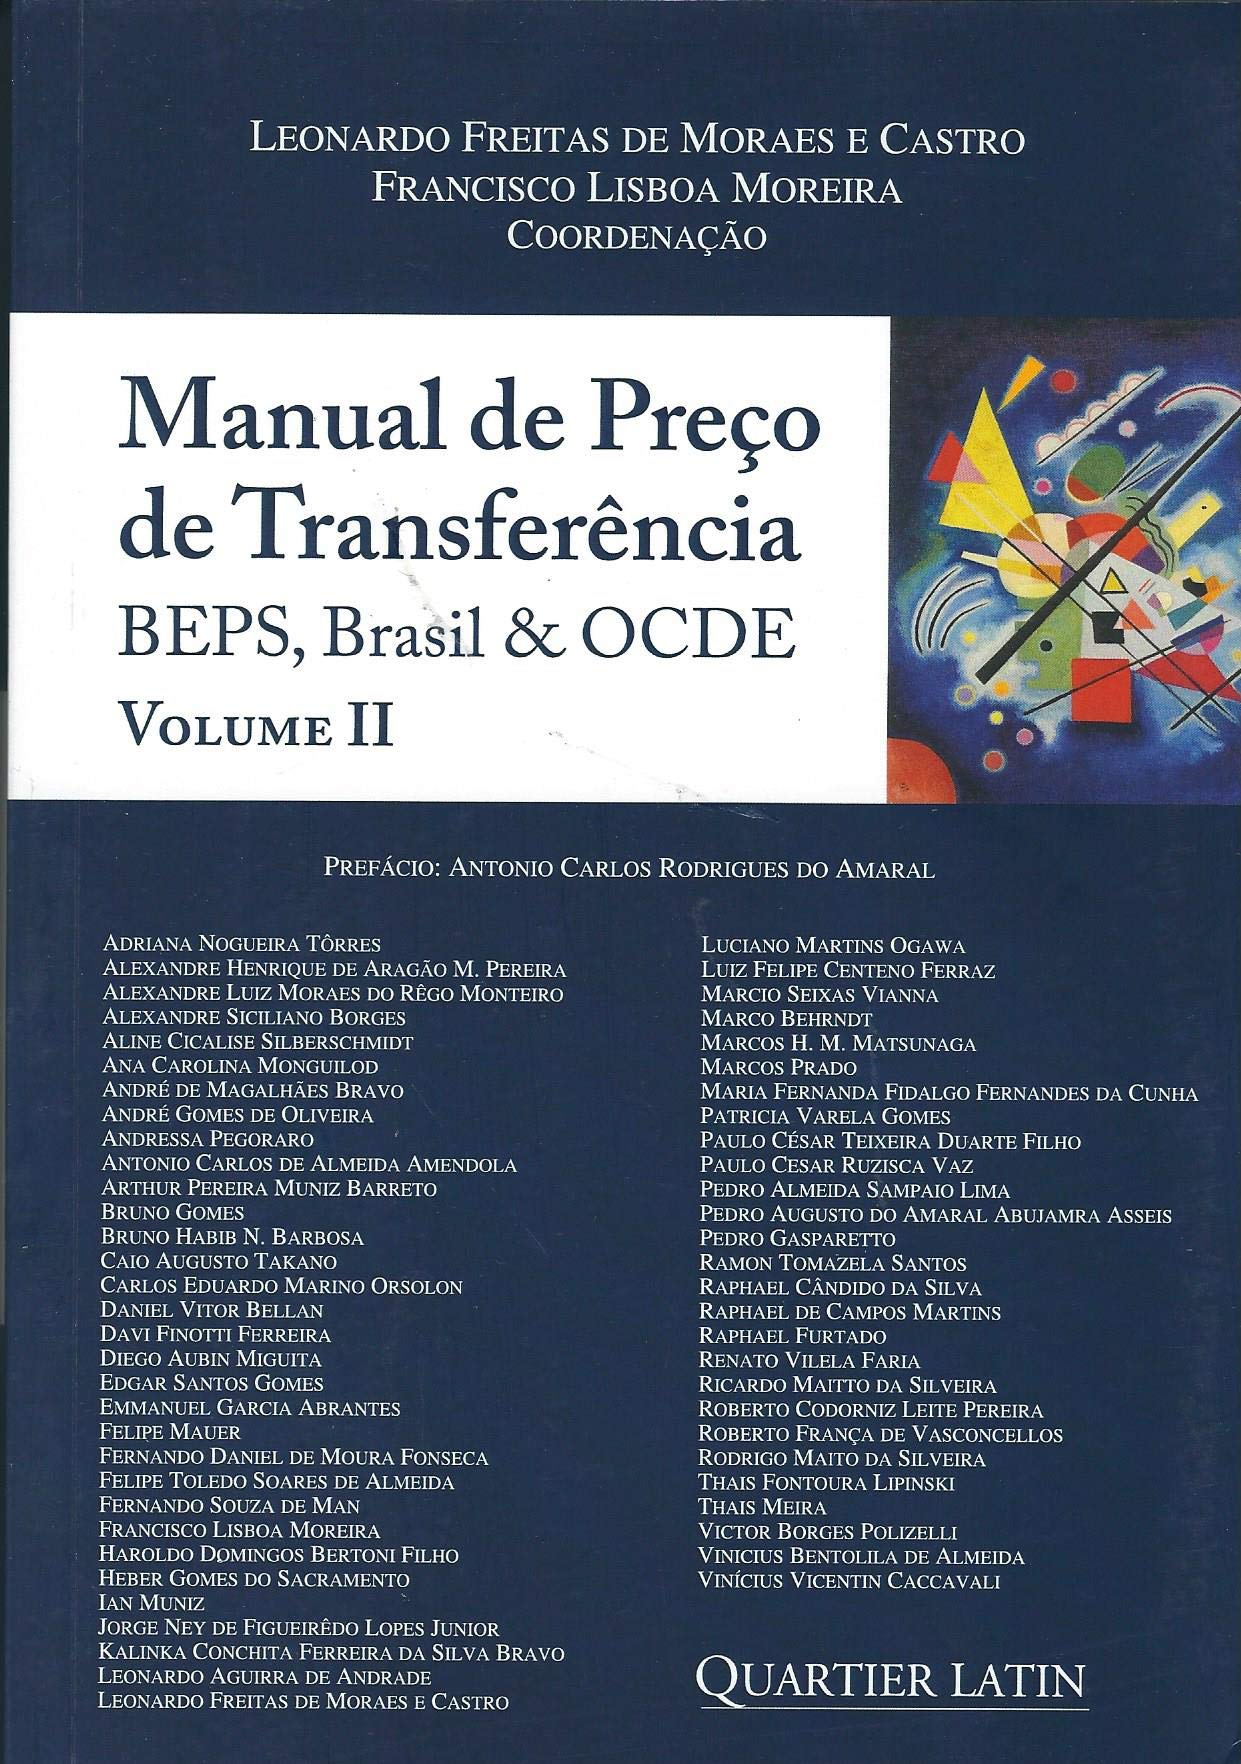 Manual de Preço de Transferência -
Volume II